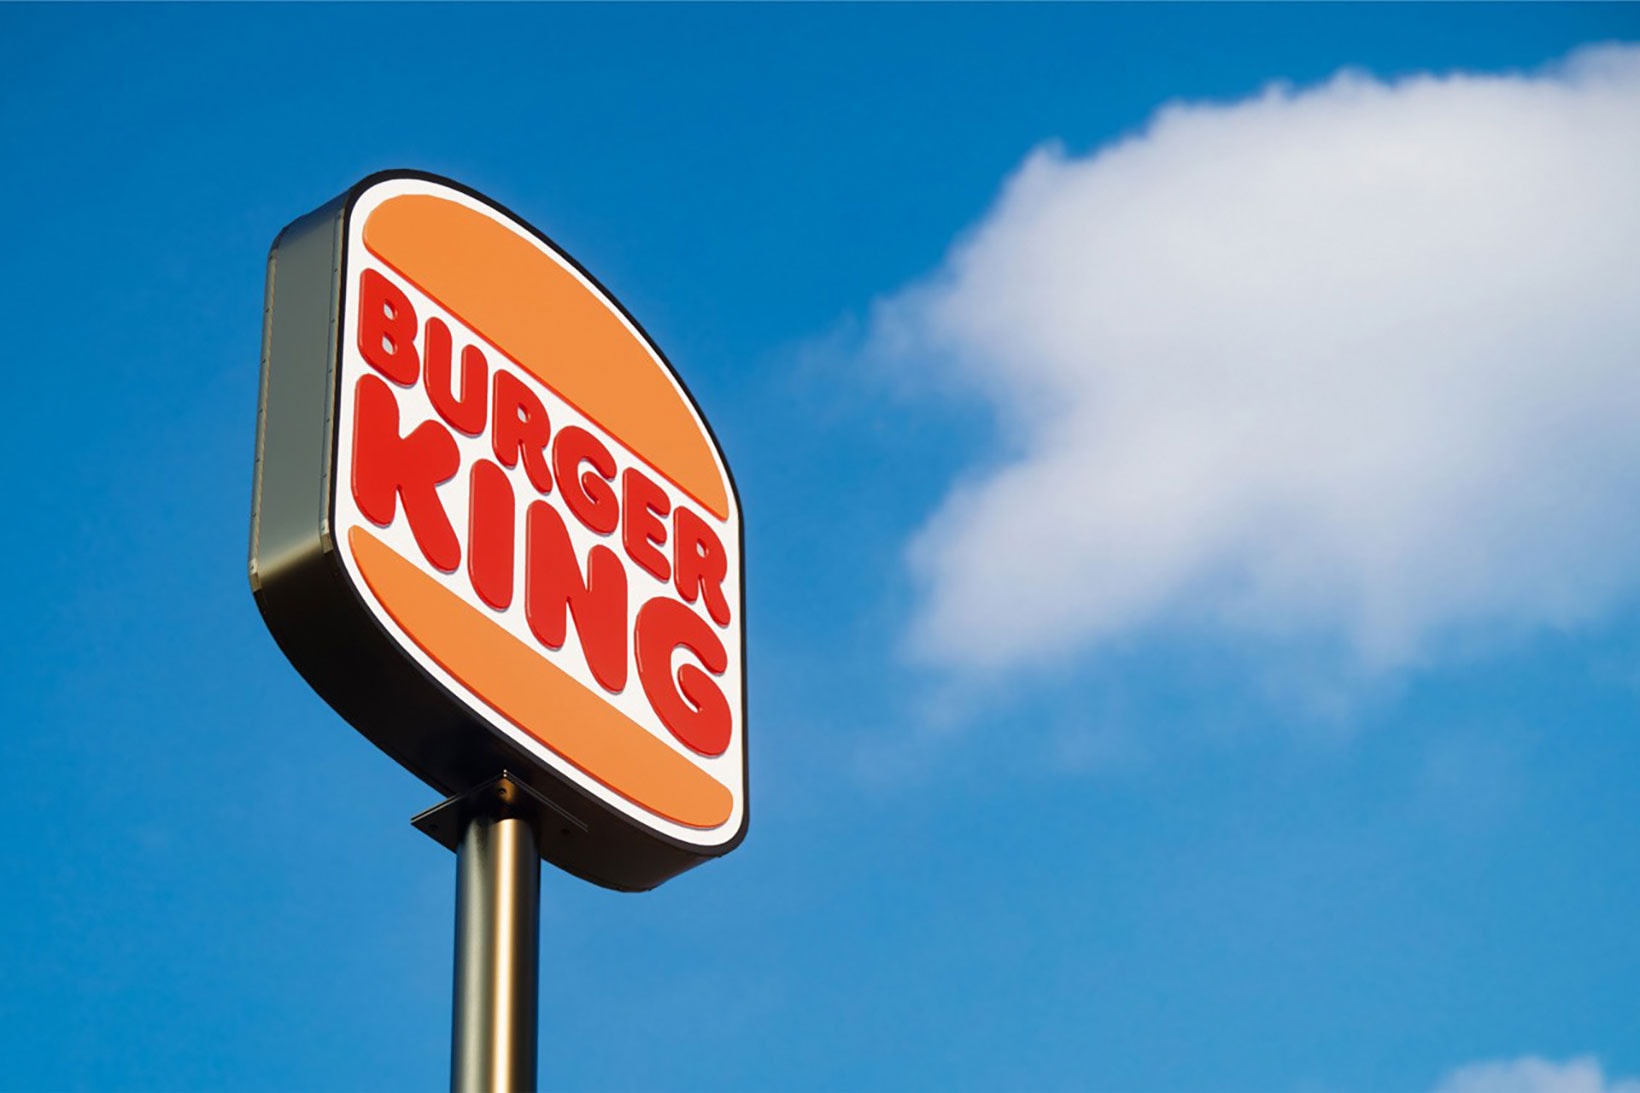 burger king rebrand new minimal design logo packaging fast food restaurant sign